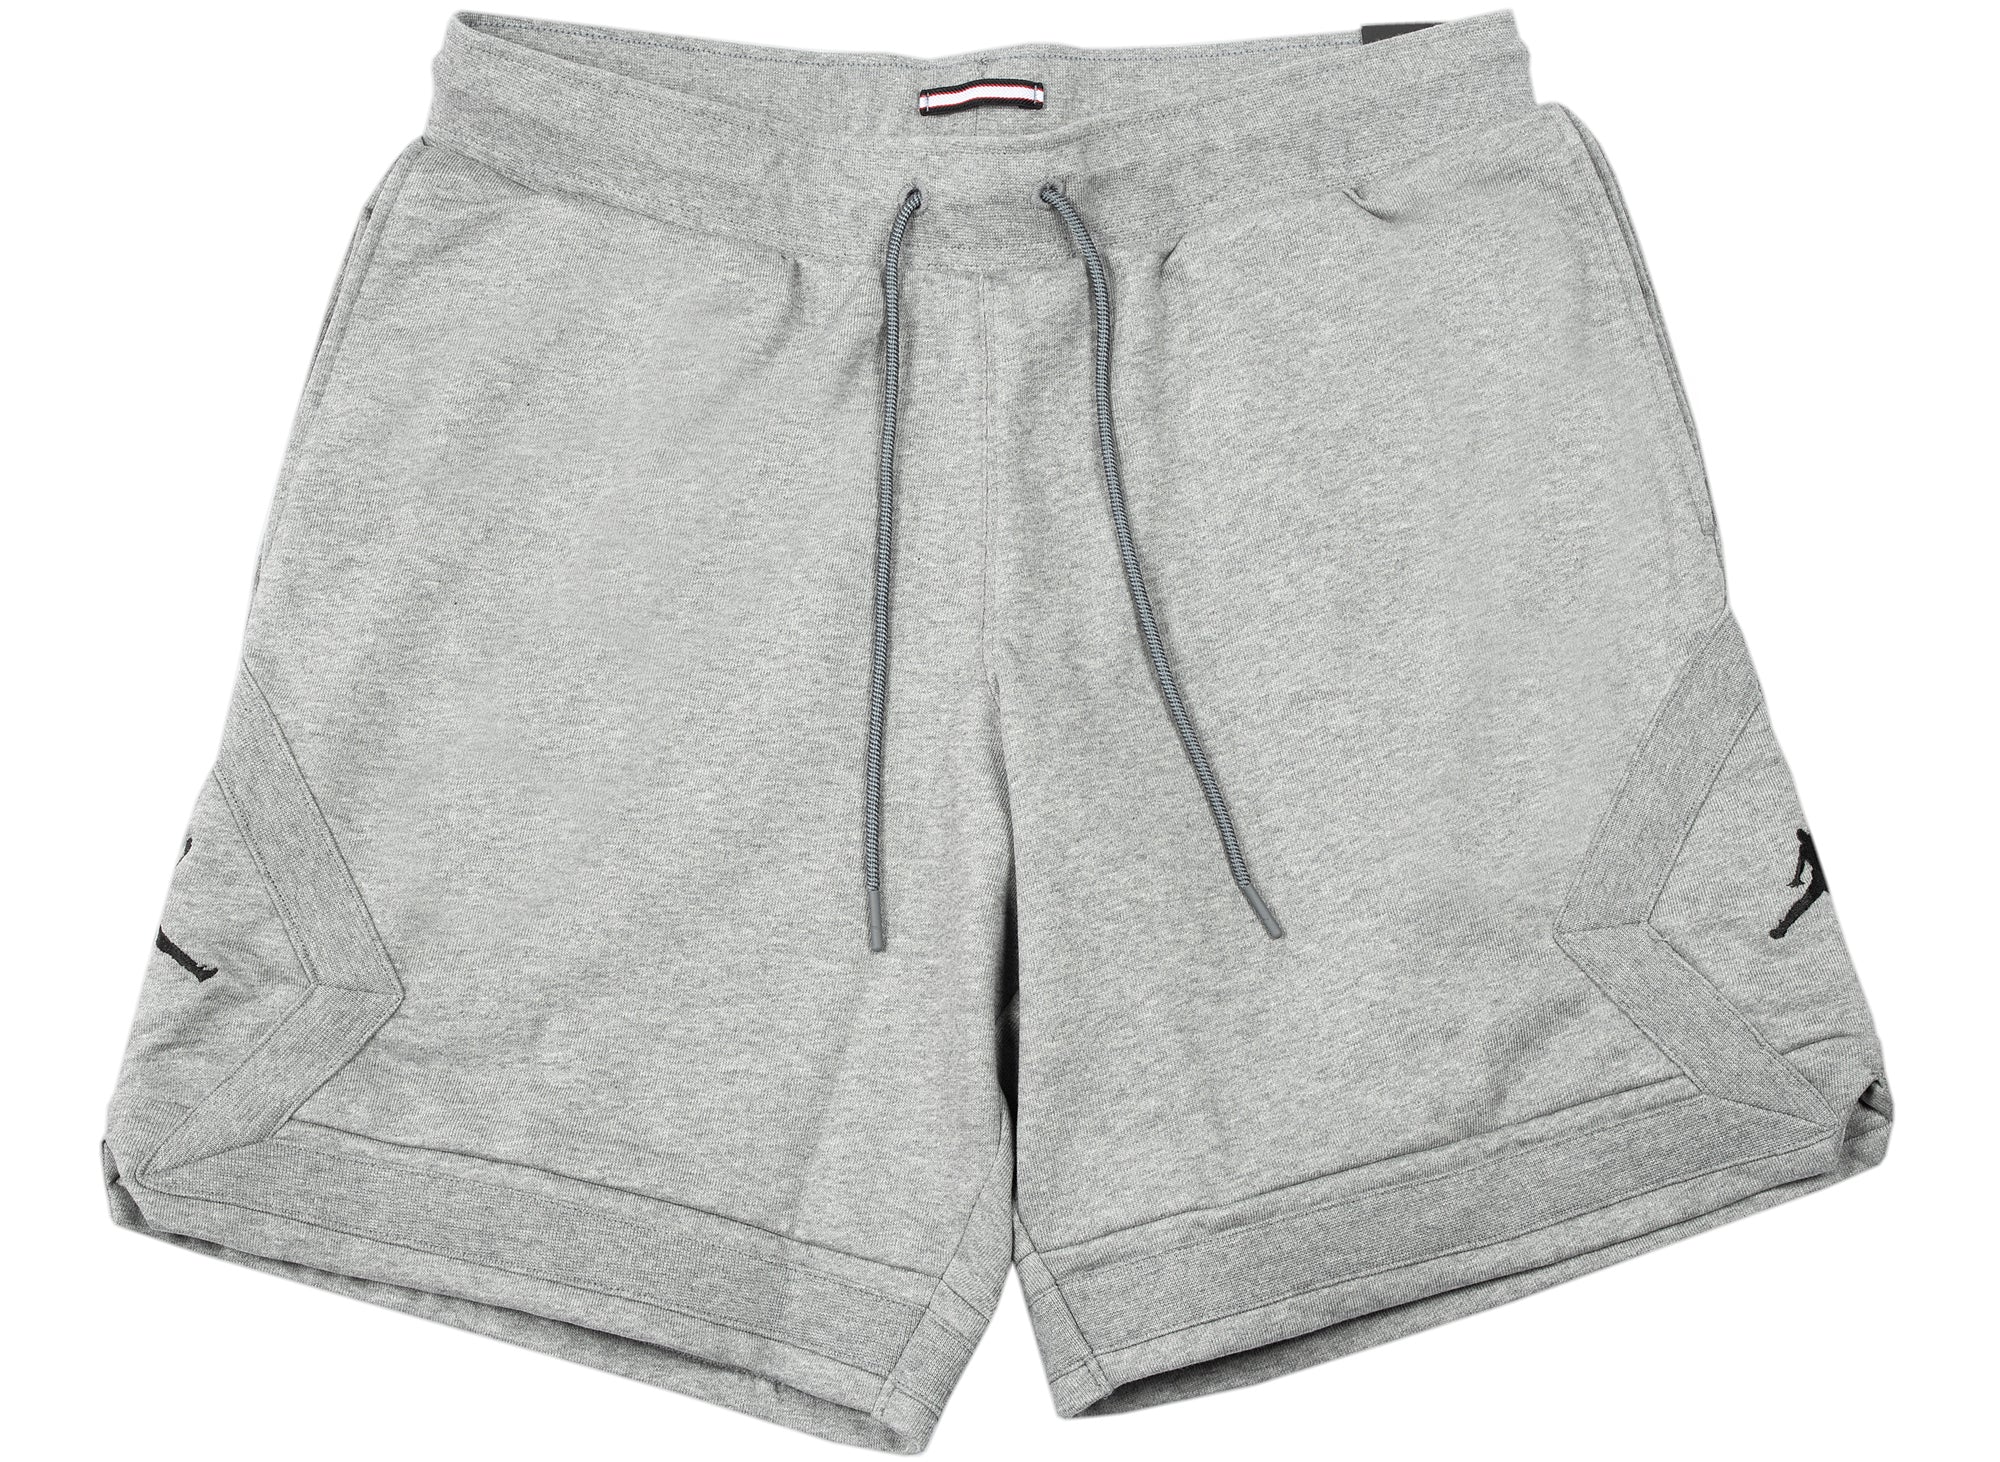 Jordan Jumpman Diamond Fleece Shorts in 